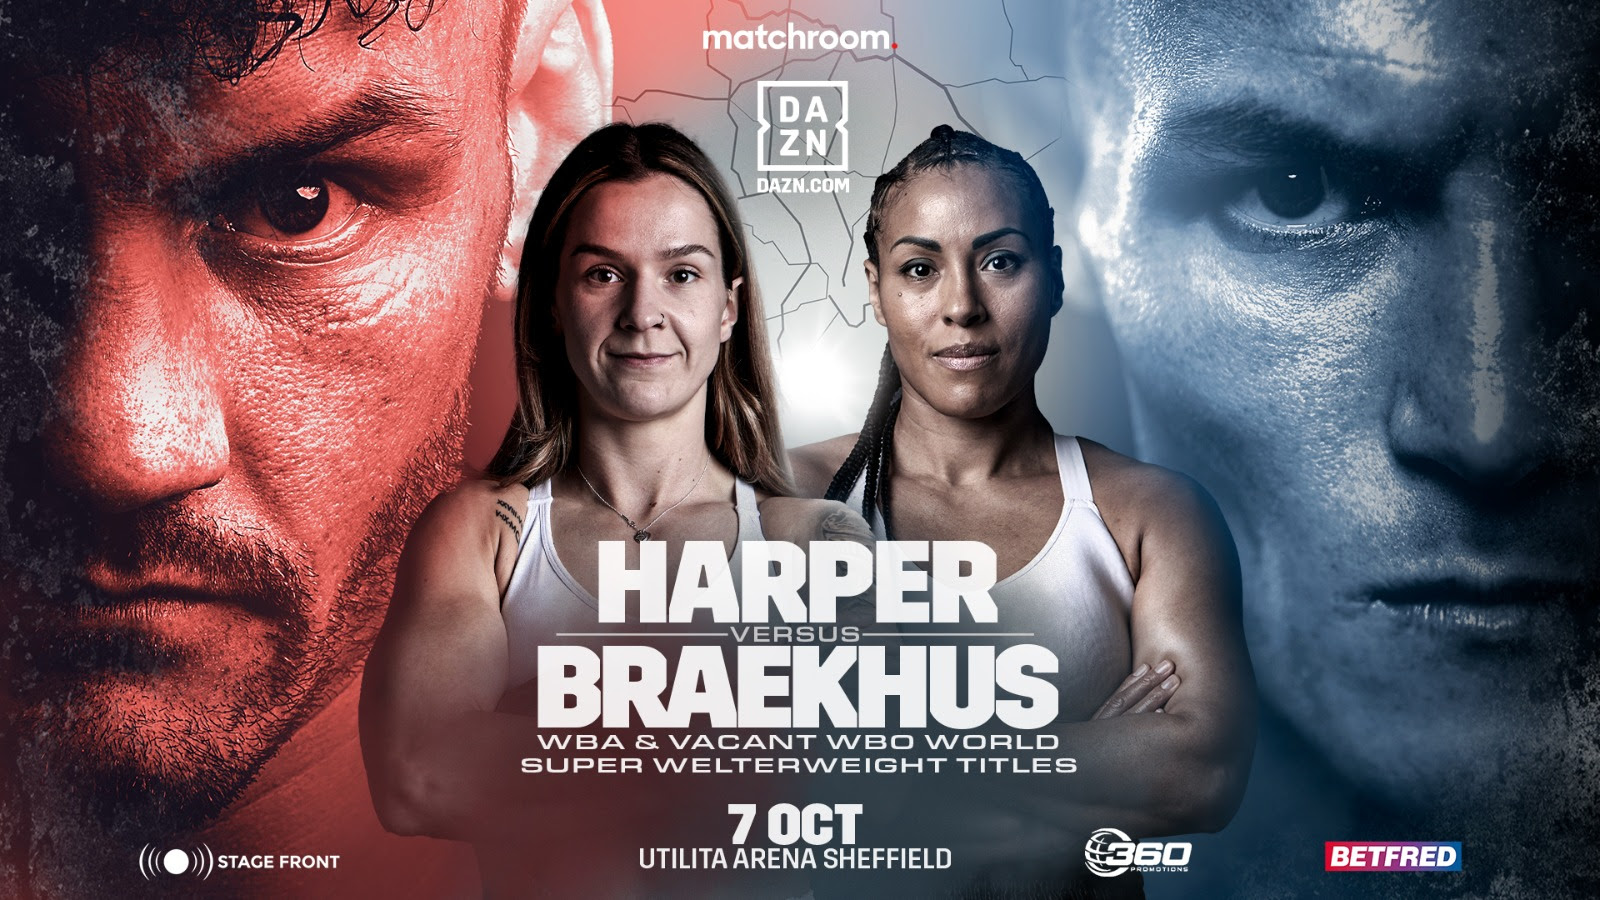 Braekhus takes on Harper for WBO and WBA 154 pound world titles